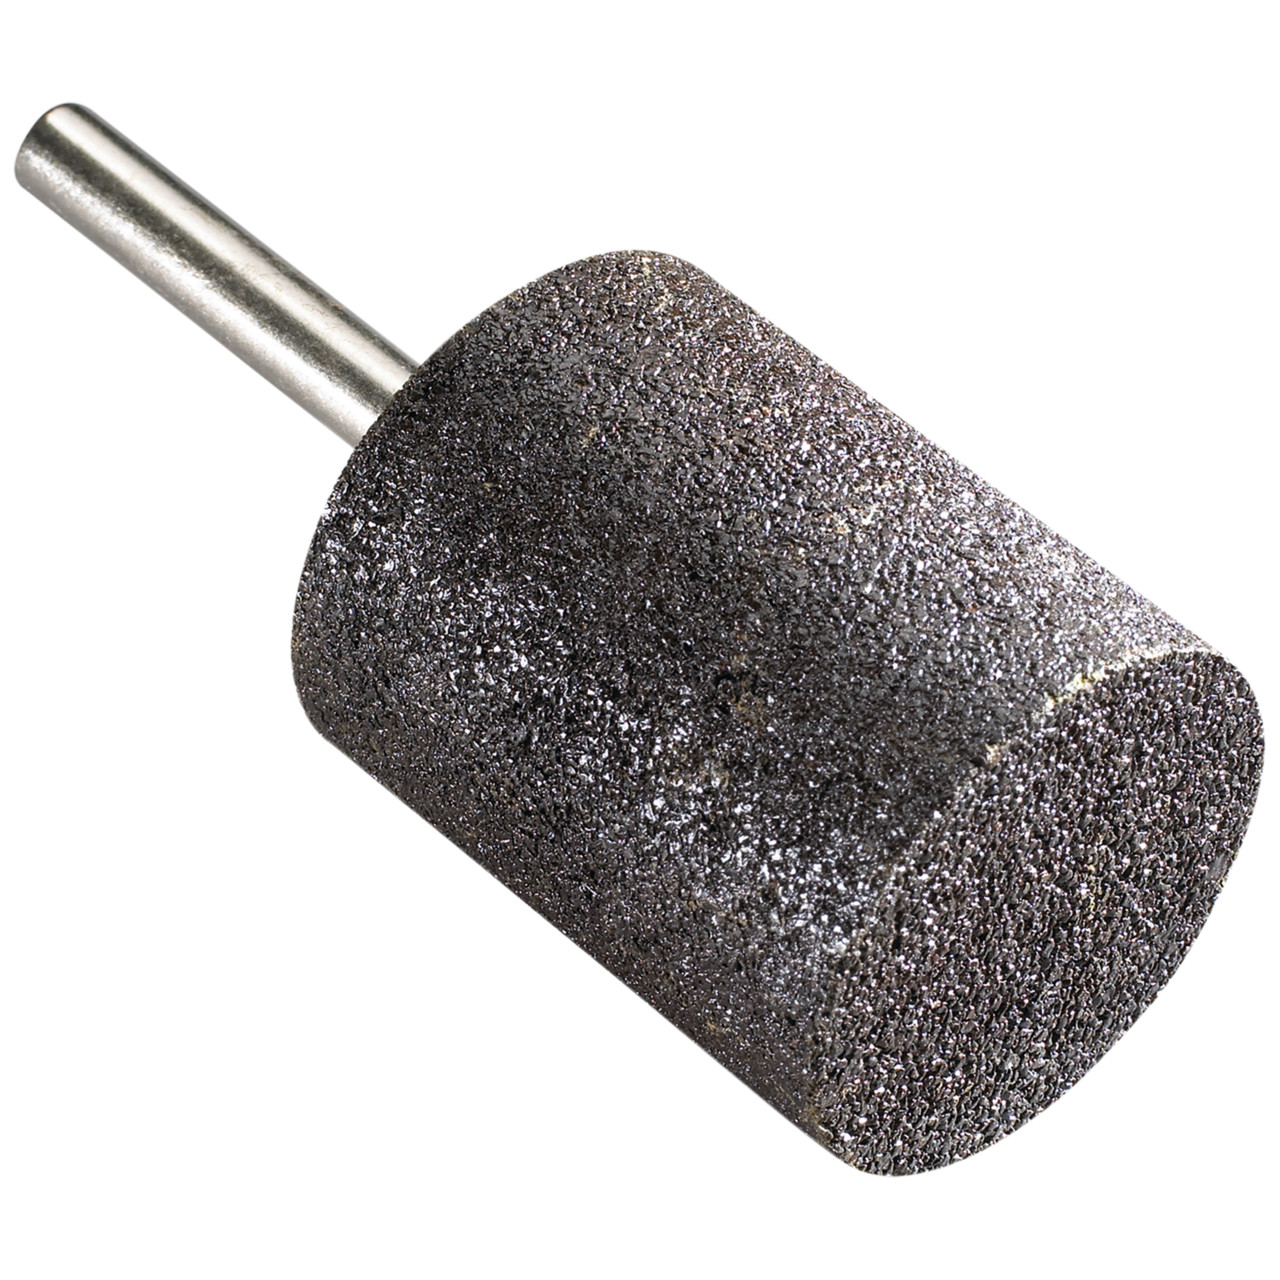 Tyrolit Punti montati in resina DxT-SxL 8x16-6x40 Per acciaio inox, forma: 52ZY - cilindro (punto montato), Art. 682101